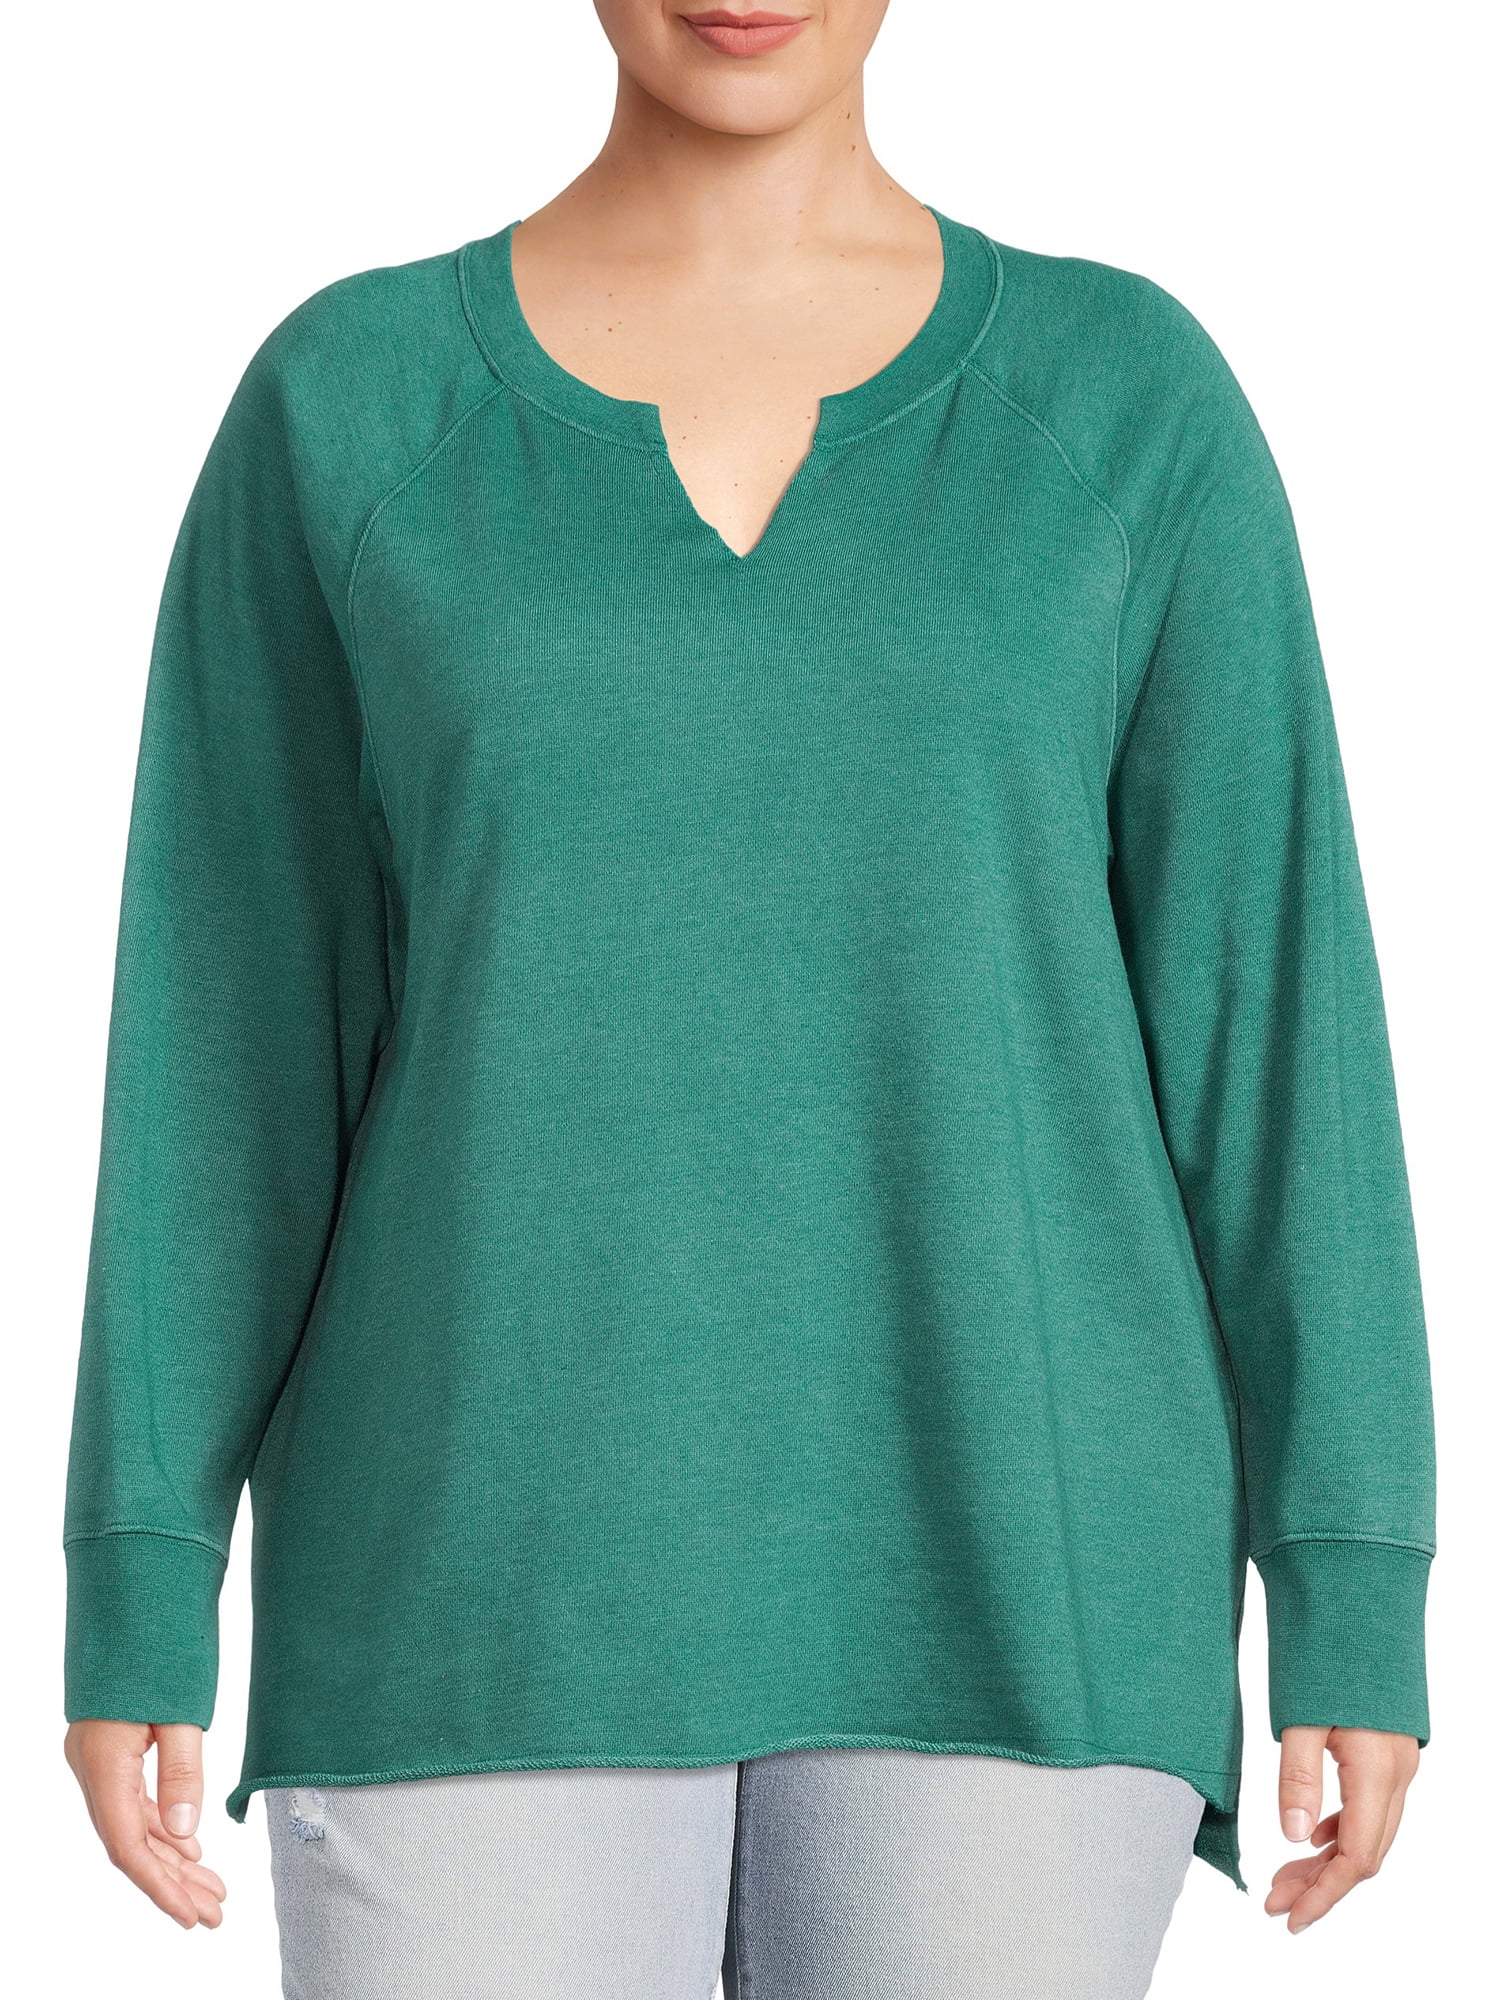 Terra & Sky Women's Plus Size French Terry Sweatshirt